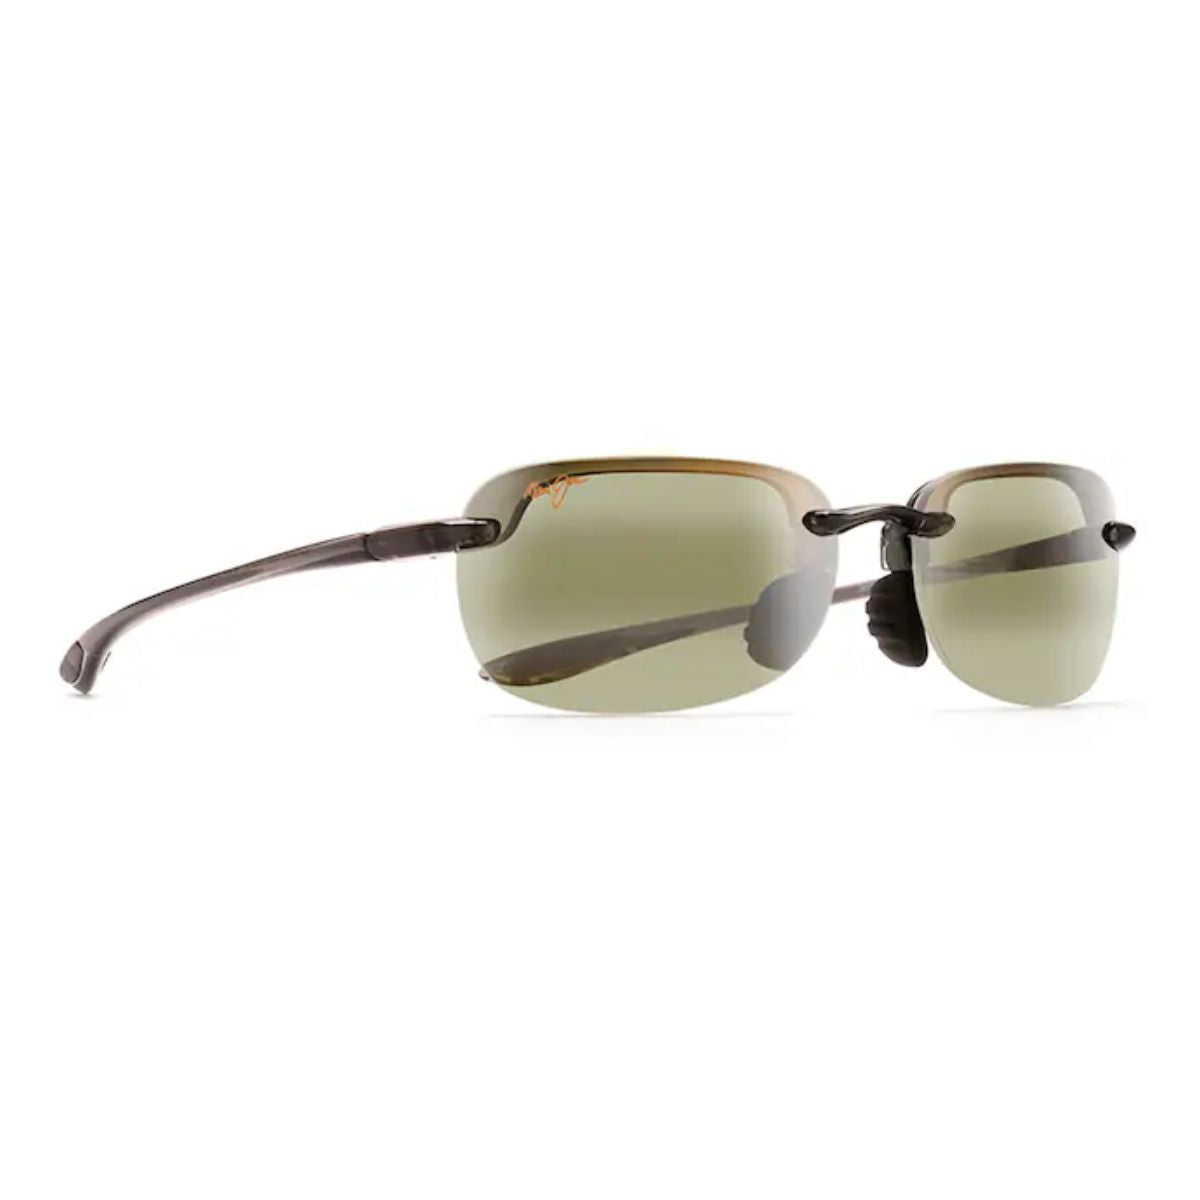 "Buy Maui Jim Polarized Sunglasses For Men's At Online Optorium"